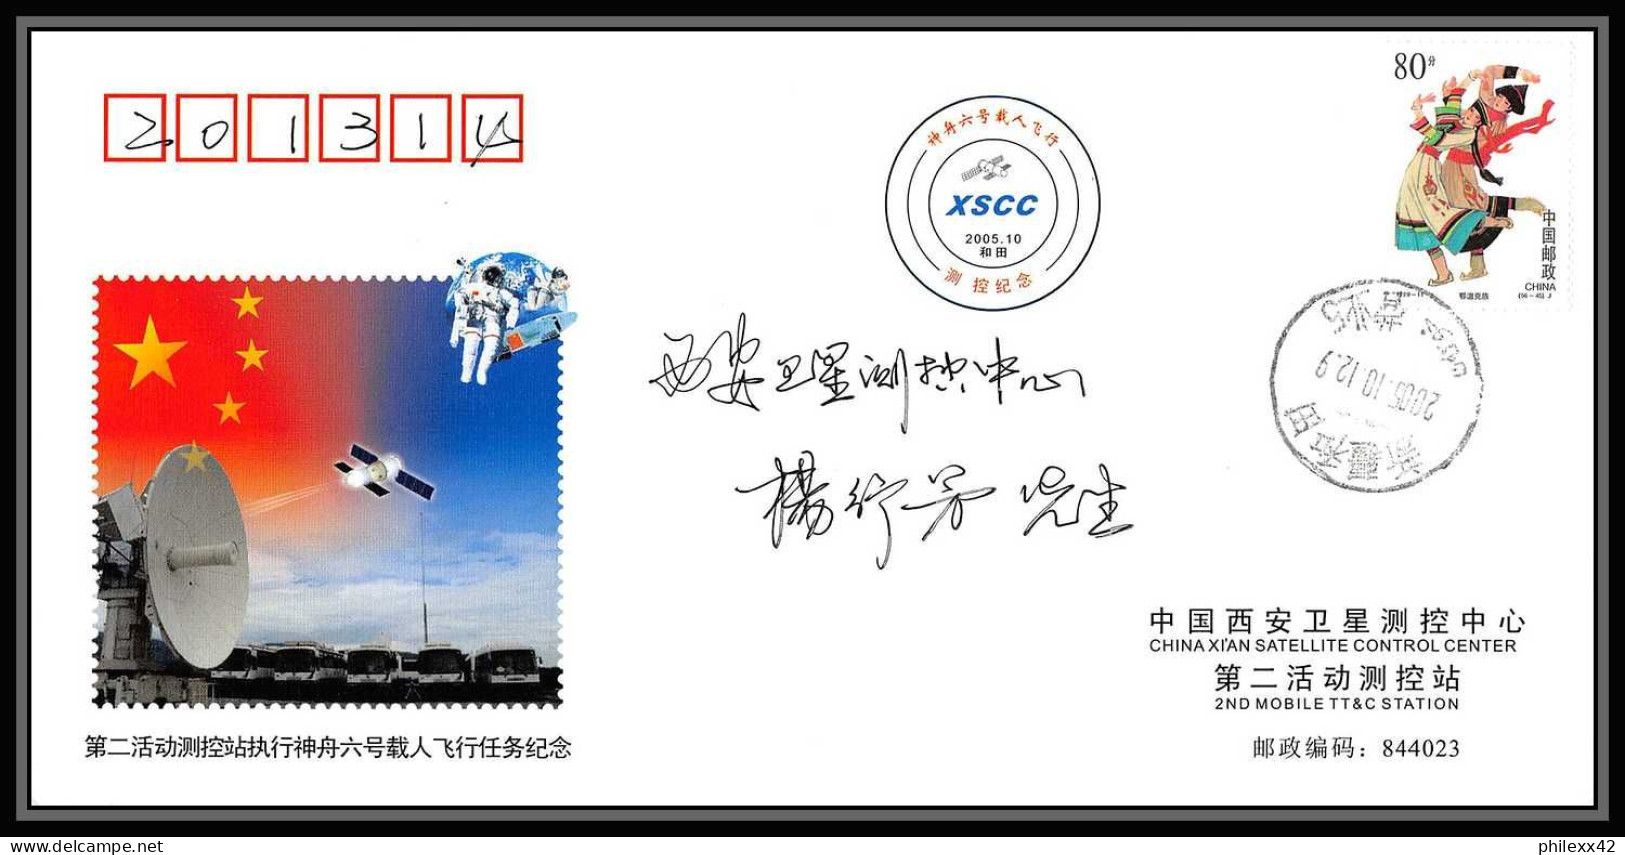 1371 Espace (space Raumfahrt) lot de 8 Lettres rar (cover briefe) CHINE (china) 2005 TIRAGE 500 EXEMPLAIRES